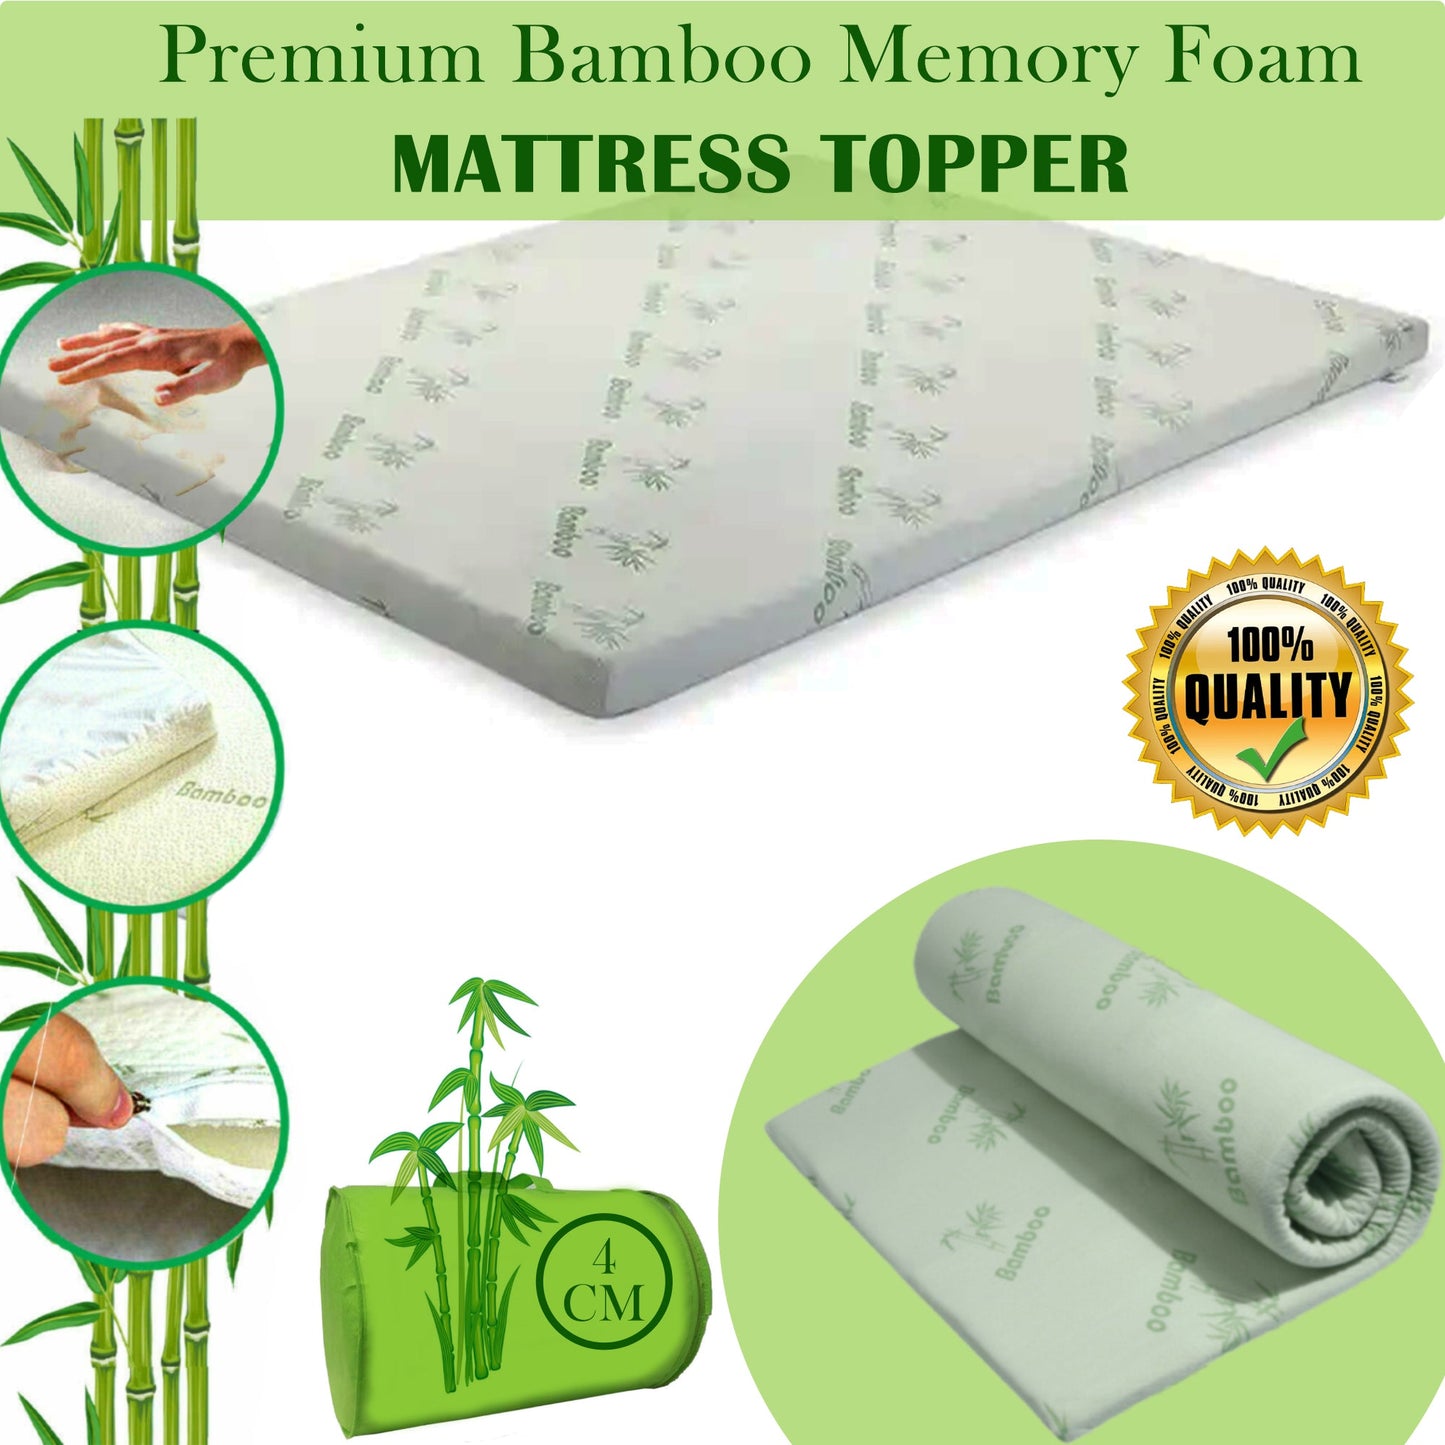 Bamboo Memory Foam Bed Mattress Topper 4cm - TheComfortshop.co.ukMattress Toppers0721718957478thecomfortshopTheComfortshop.co.ukBamboo 2 Inch Topper BunkBunkBamboo Memory Foam Bed Mattress Topper 4cm - TheComfortshop.co.uk